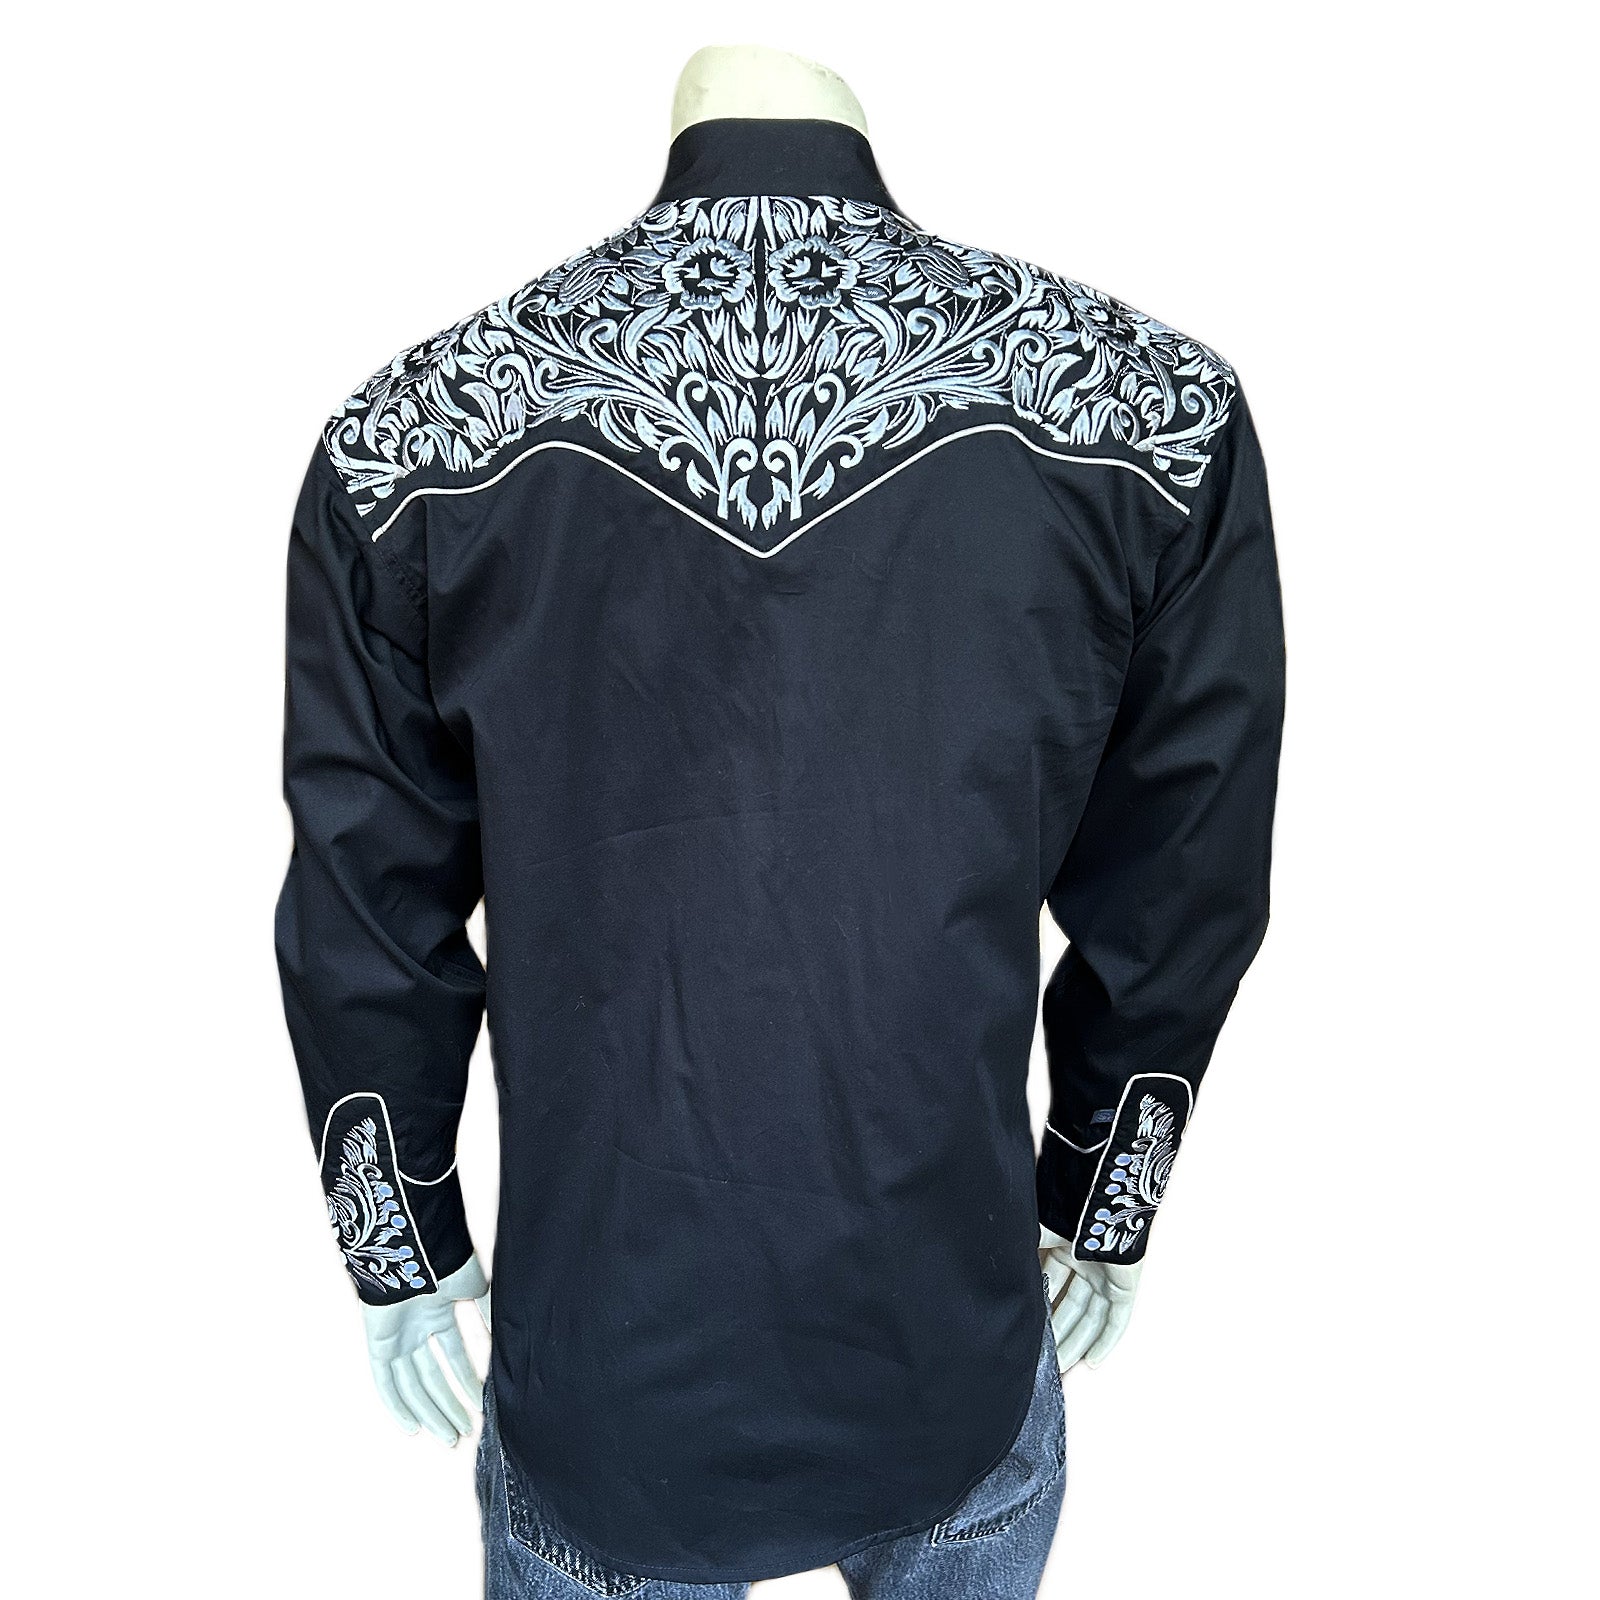 Men's Vintage Tooling Embroidered Black & Silver Western Shirt